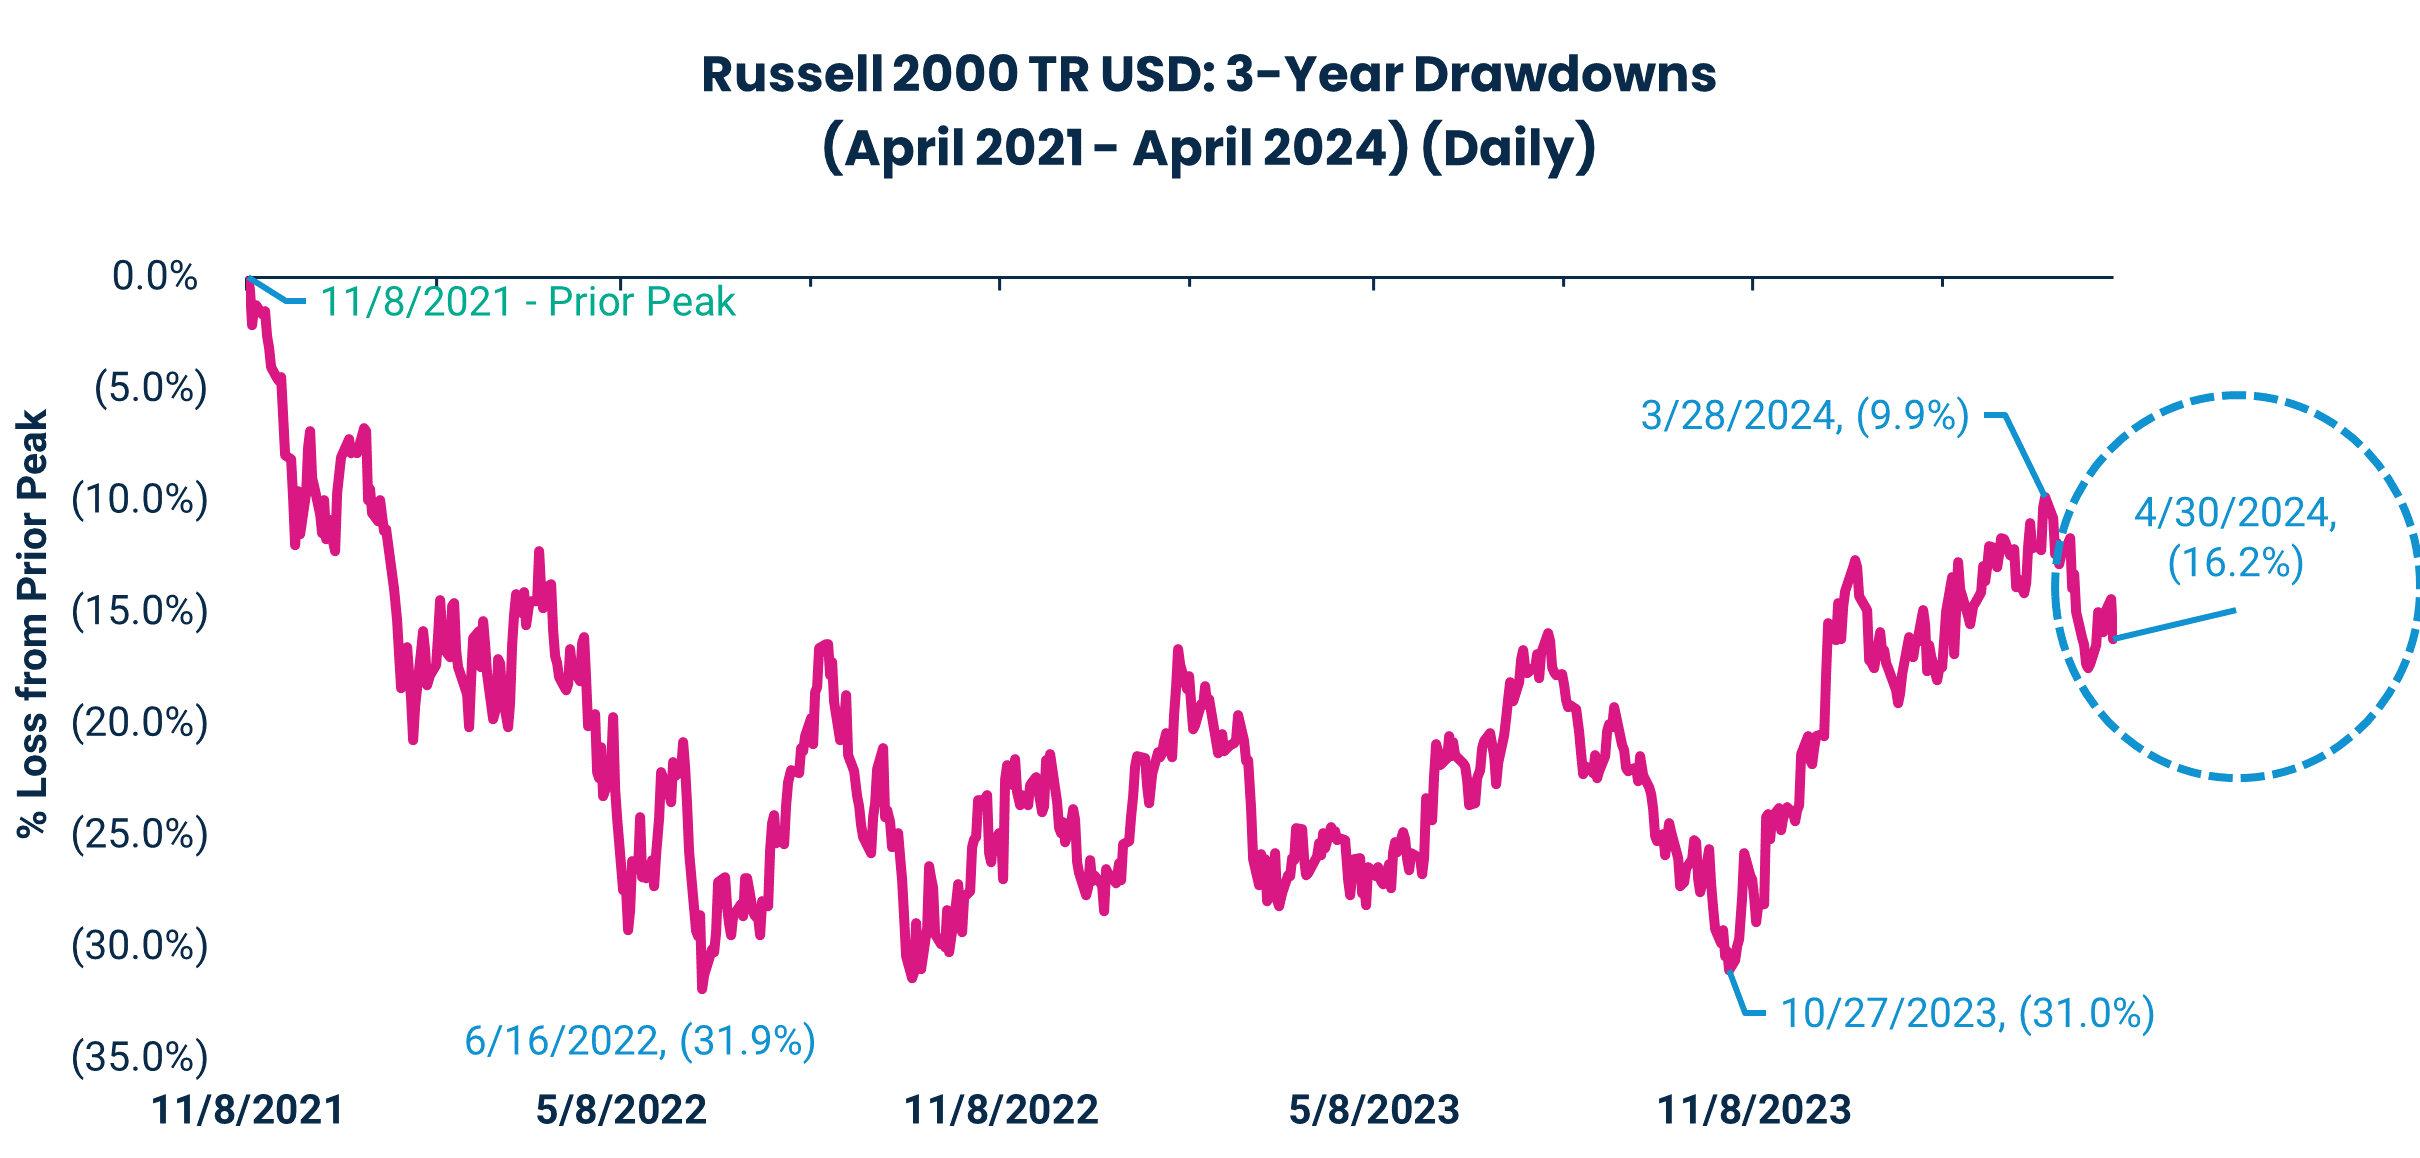 Russell 2000 TR USD: 3-Year Drawdowns
(April 2021 - April 2024) (Daily)